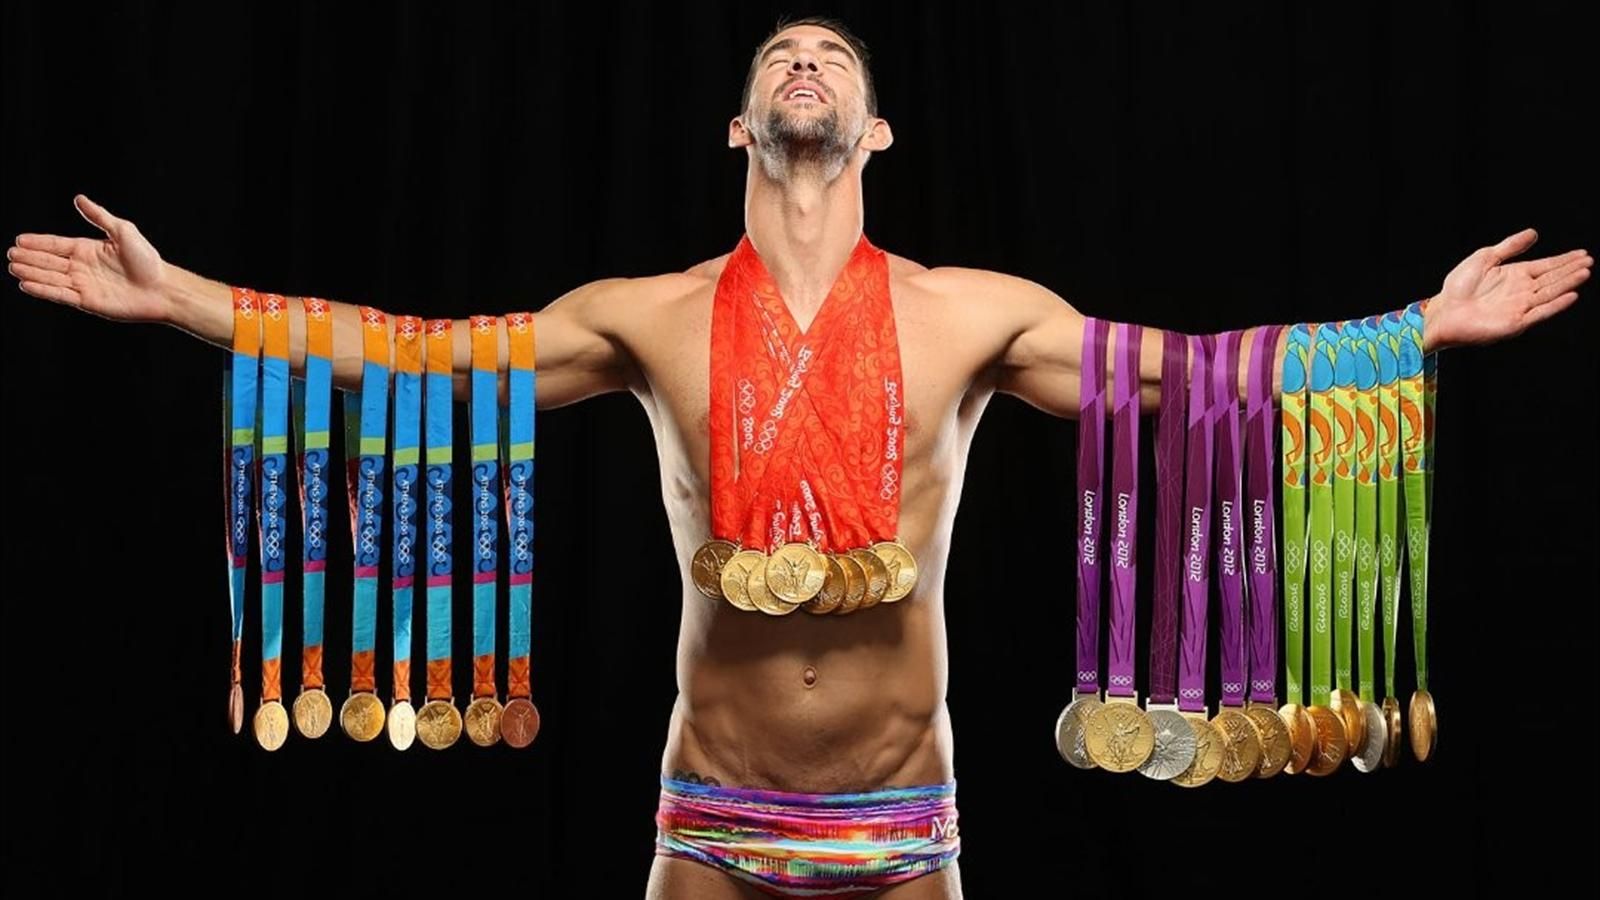 Dislessia: Michael Phelps